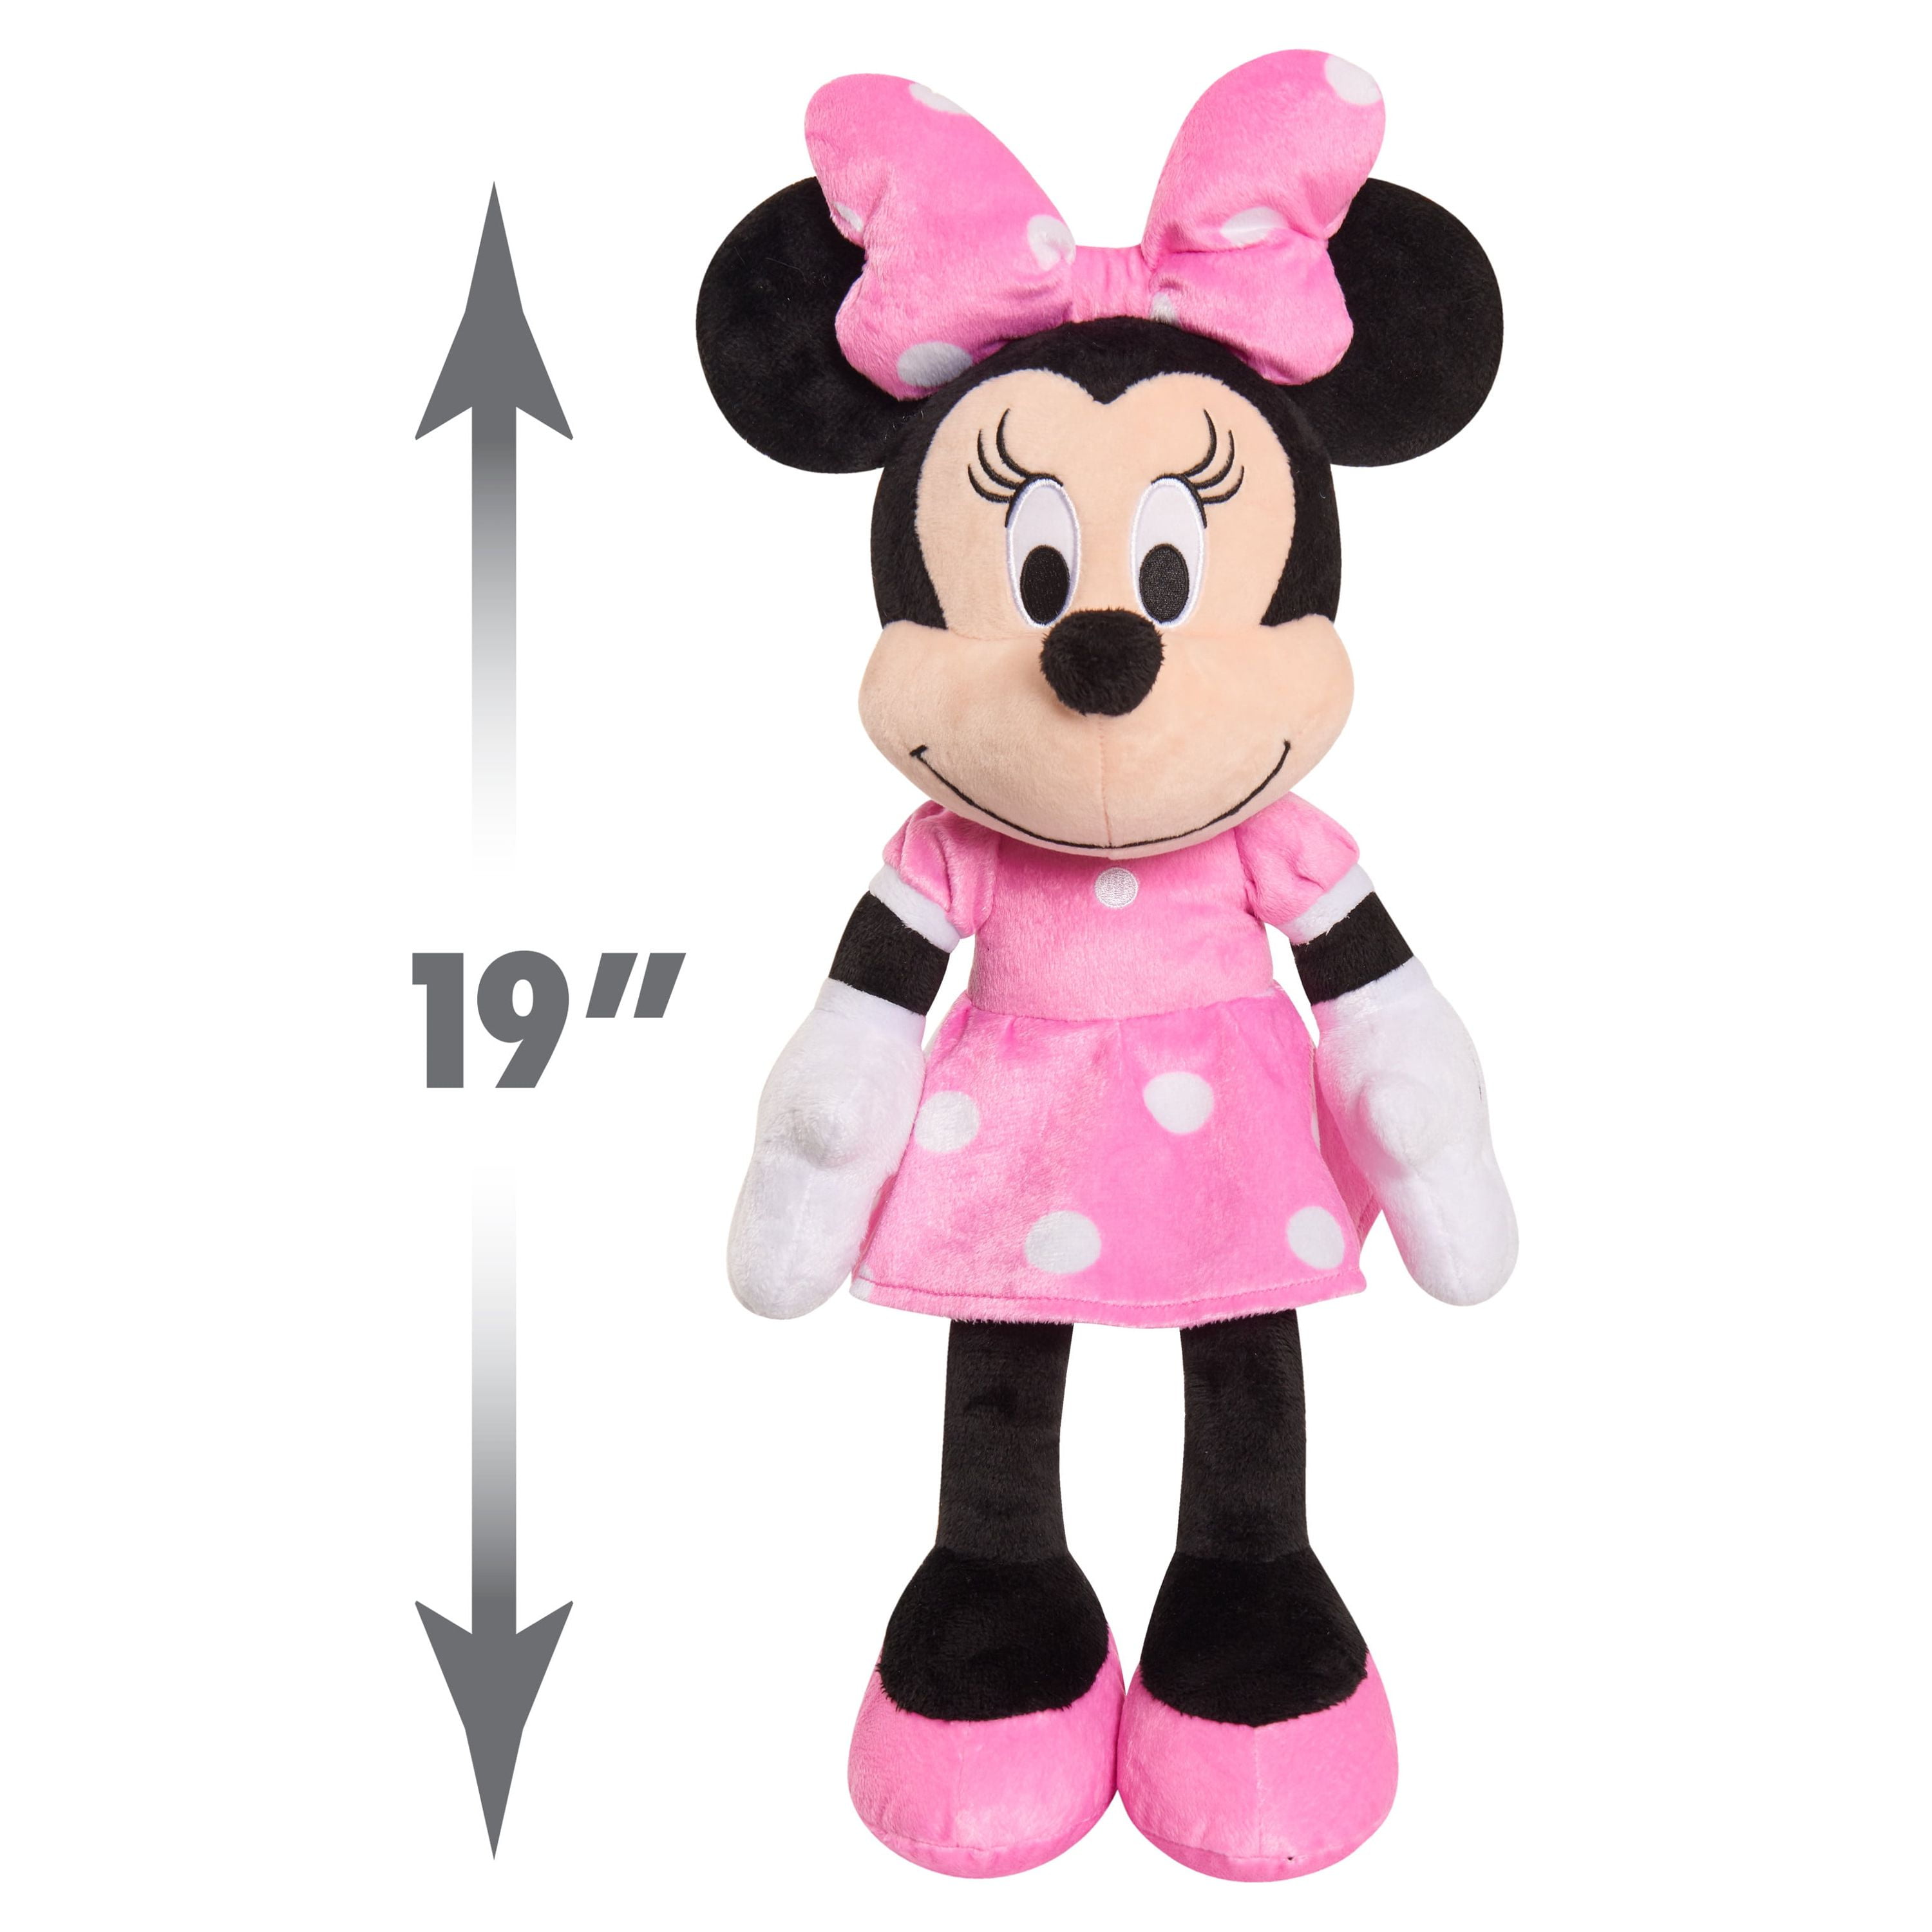 Disney Jr. T.O.T.S. Toys on Sale  Nursery Headquarters NOW $23.99!